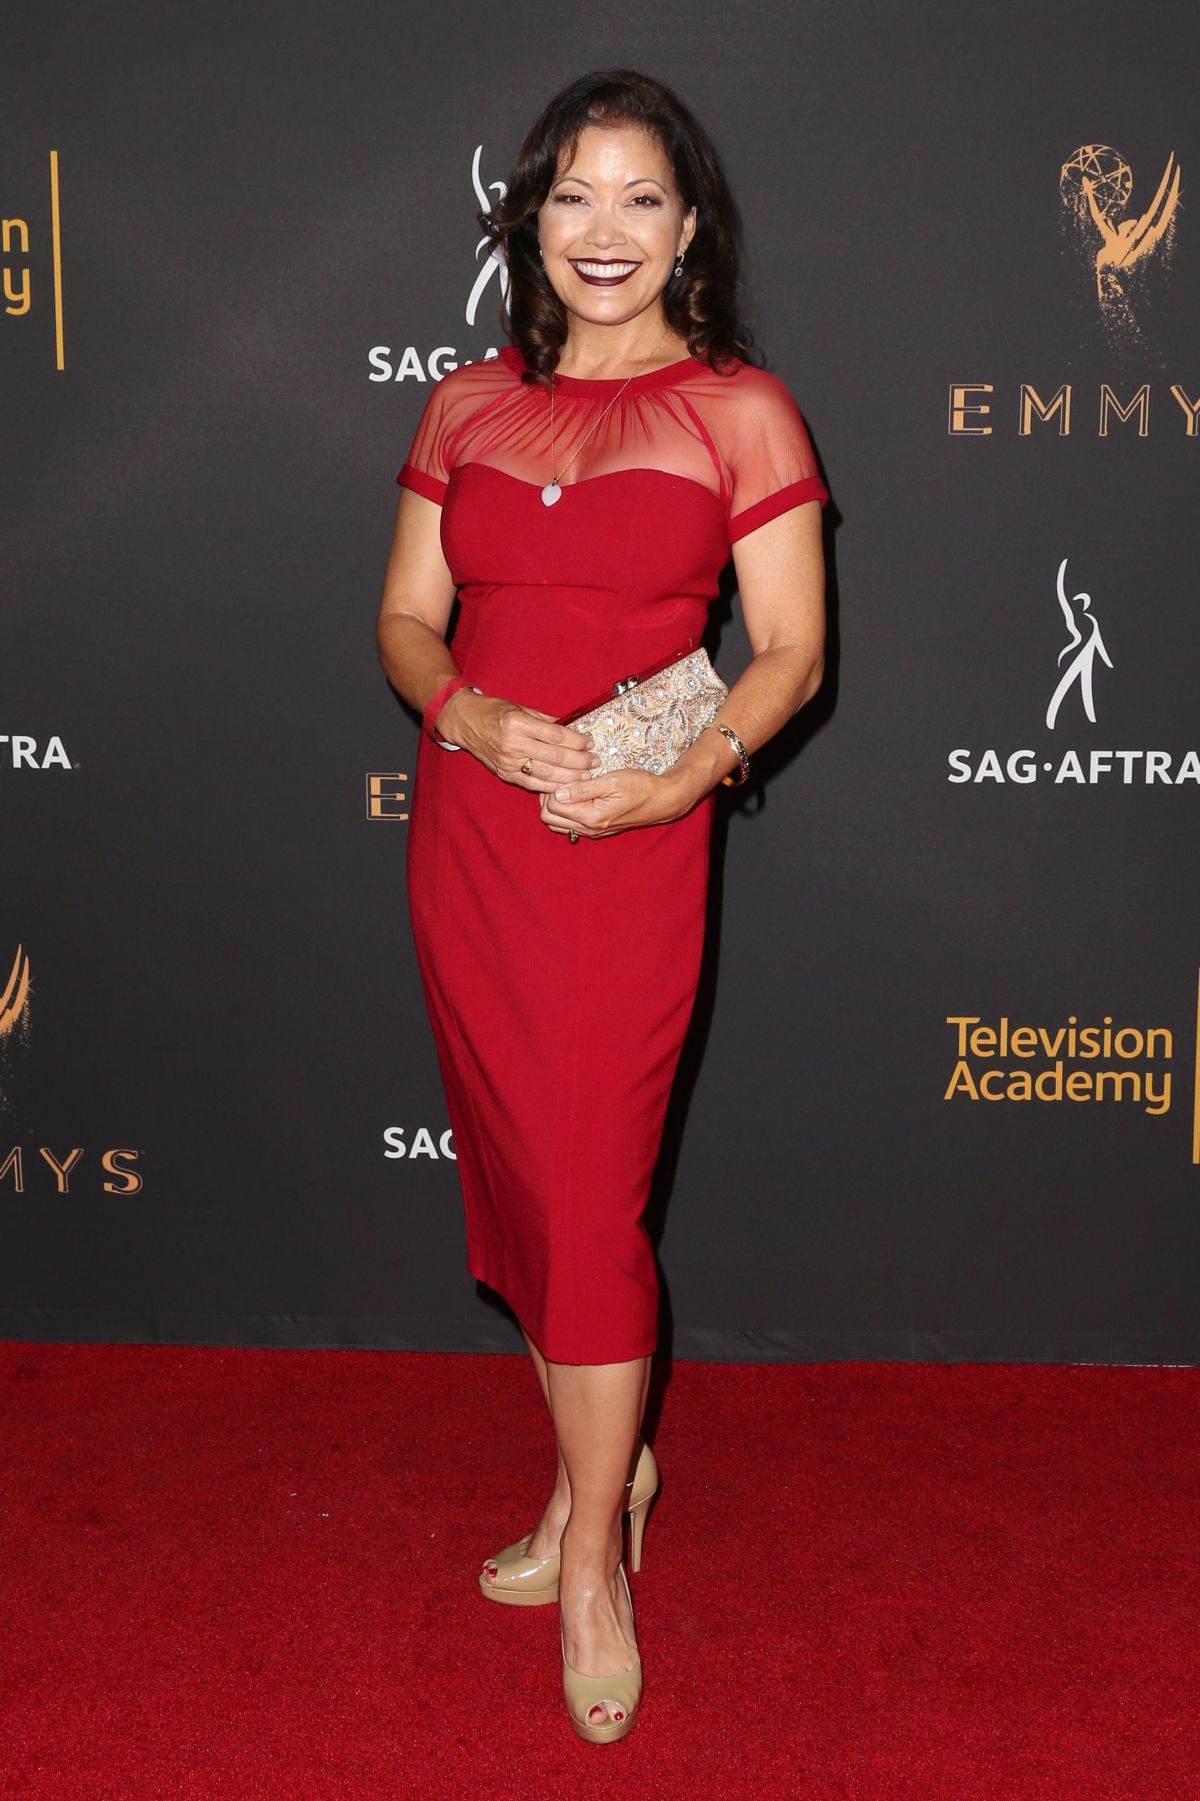 REN HANAMI at Dynamic & Diverse Emmy Reception in Los Angeles 09/12/2017